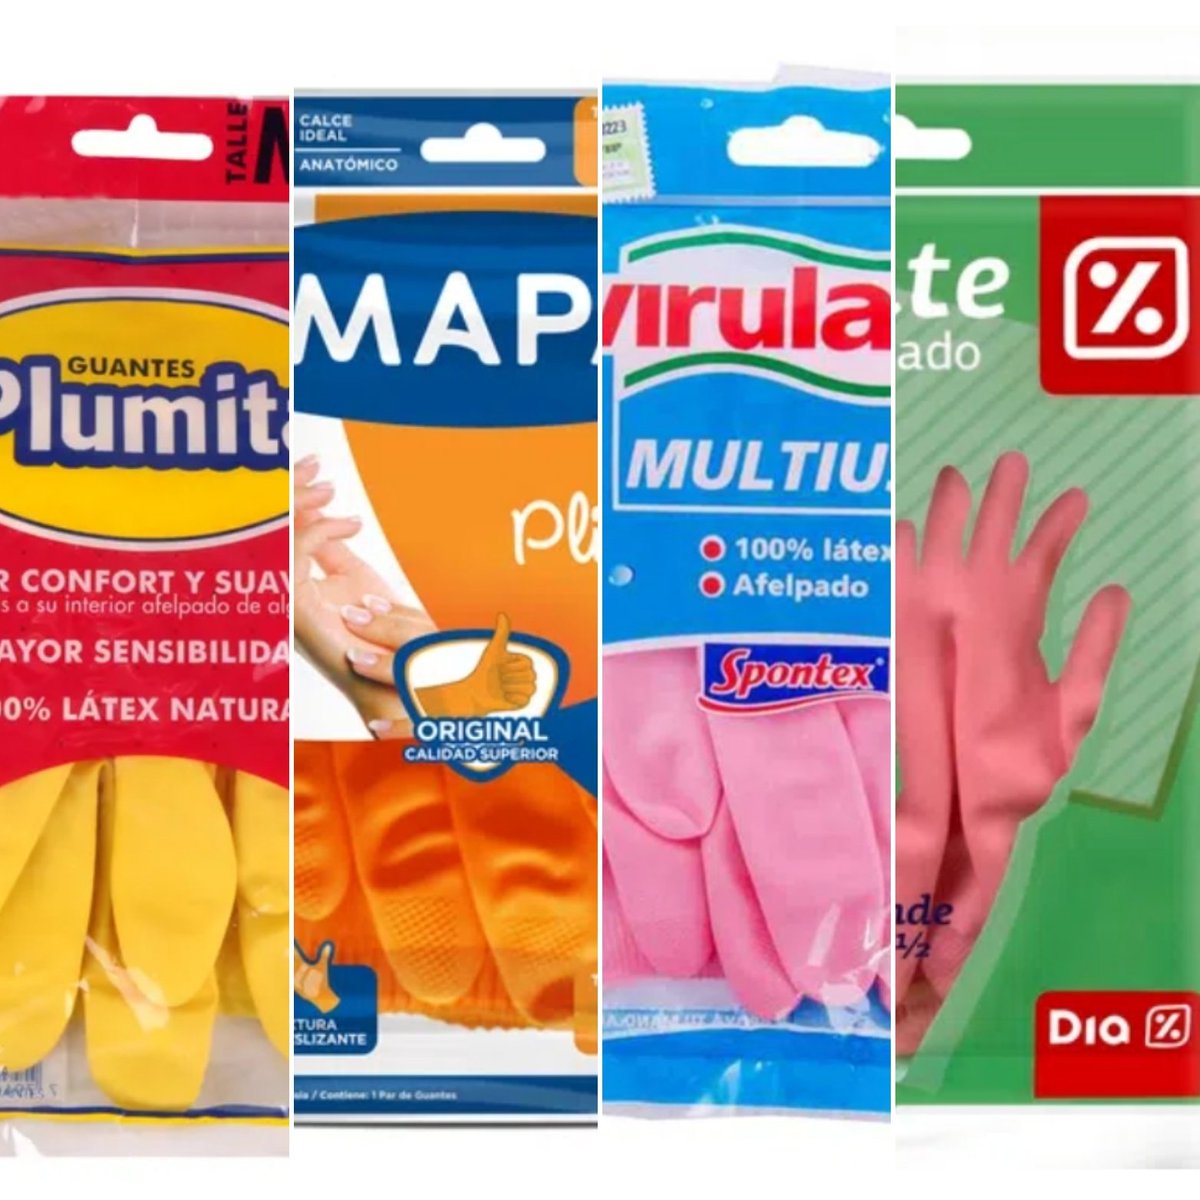 تويتر \ على "Sabías que los guantes de látex marca Mapa, Virulana, Plumita y Día están fabricados en Malasia y todos son importados por Mapa Virulana S.A.I.C.? #primerasmarcas #marcasblancas #